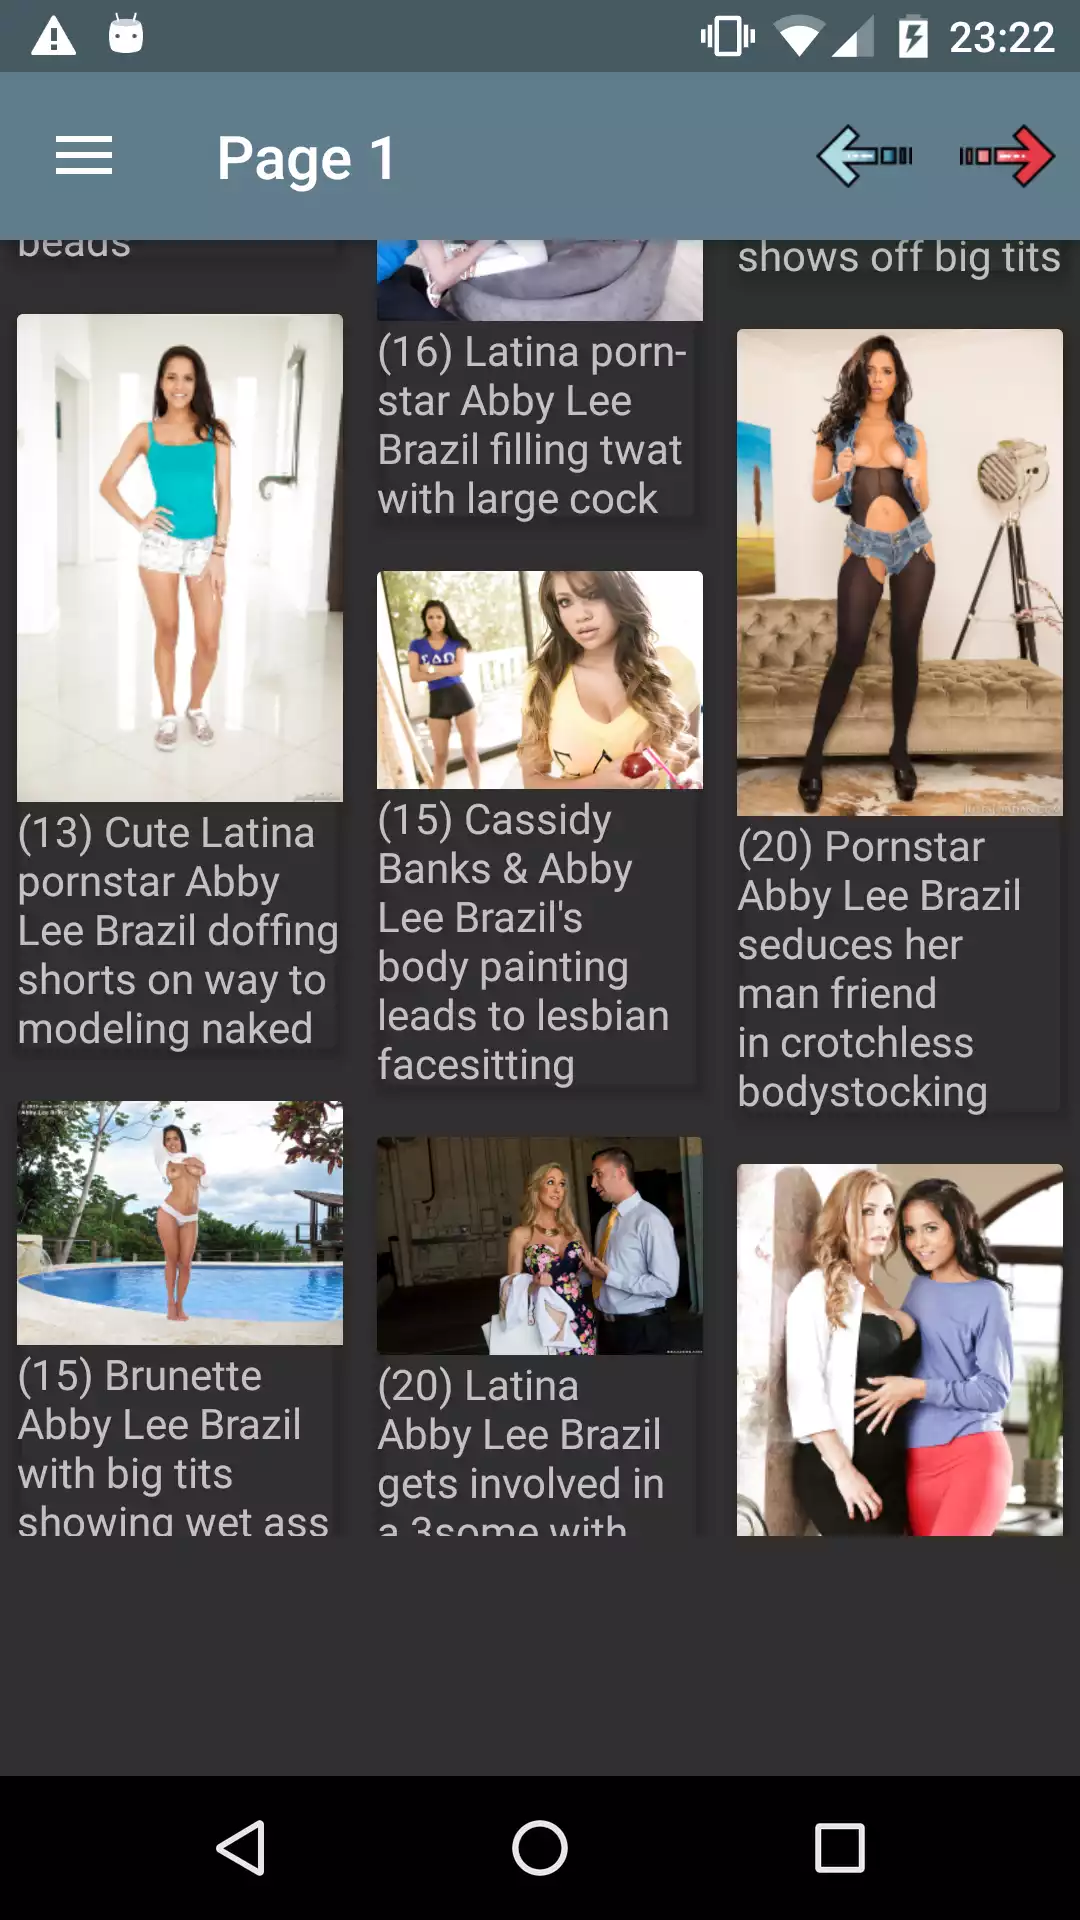 Abby Lee Brazil صور,free,download,app,girls,تطبيق,apps,porn,sexy,هنتاي,image,pornstar,pics,comix,viewer,stars,hentai,hentia,hot,apk,galleries,pornstars,best,harem